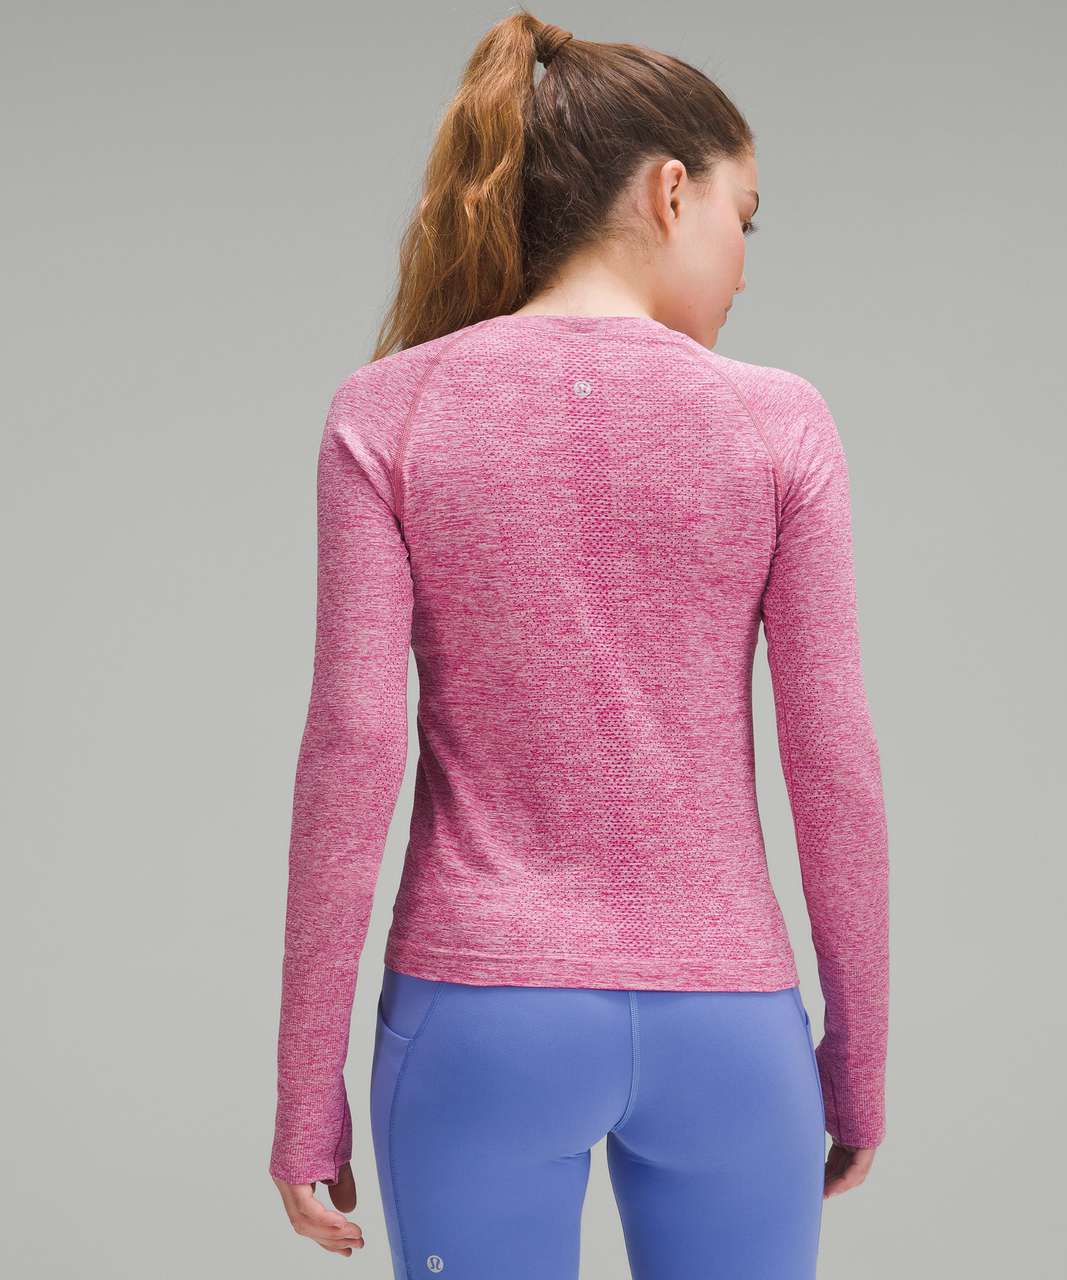 Lululemon Swiftly Tech Long-Sleeve Shirt 2.0 *Race Length - Wild Berry / Pink Peony